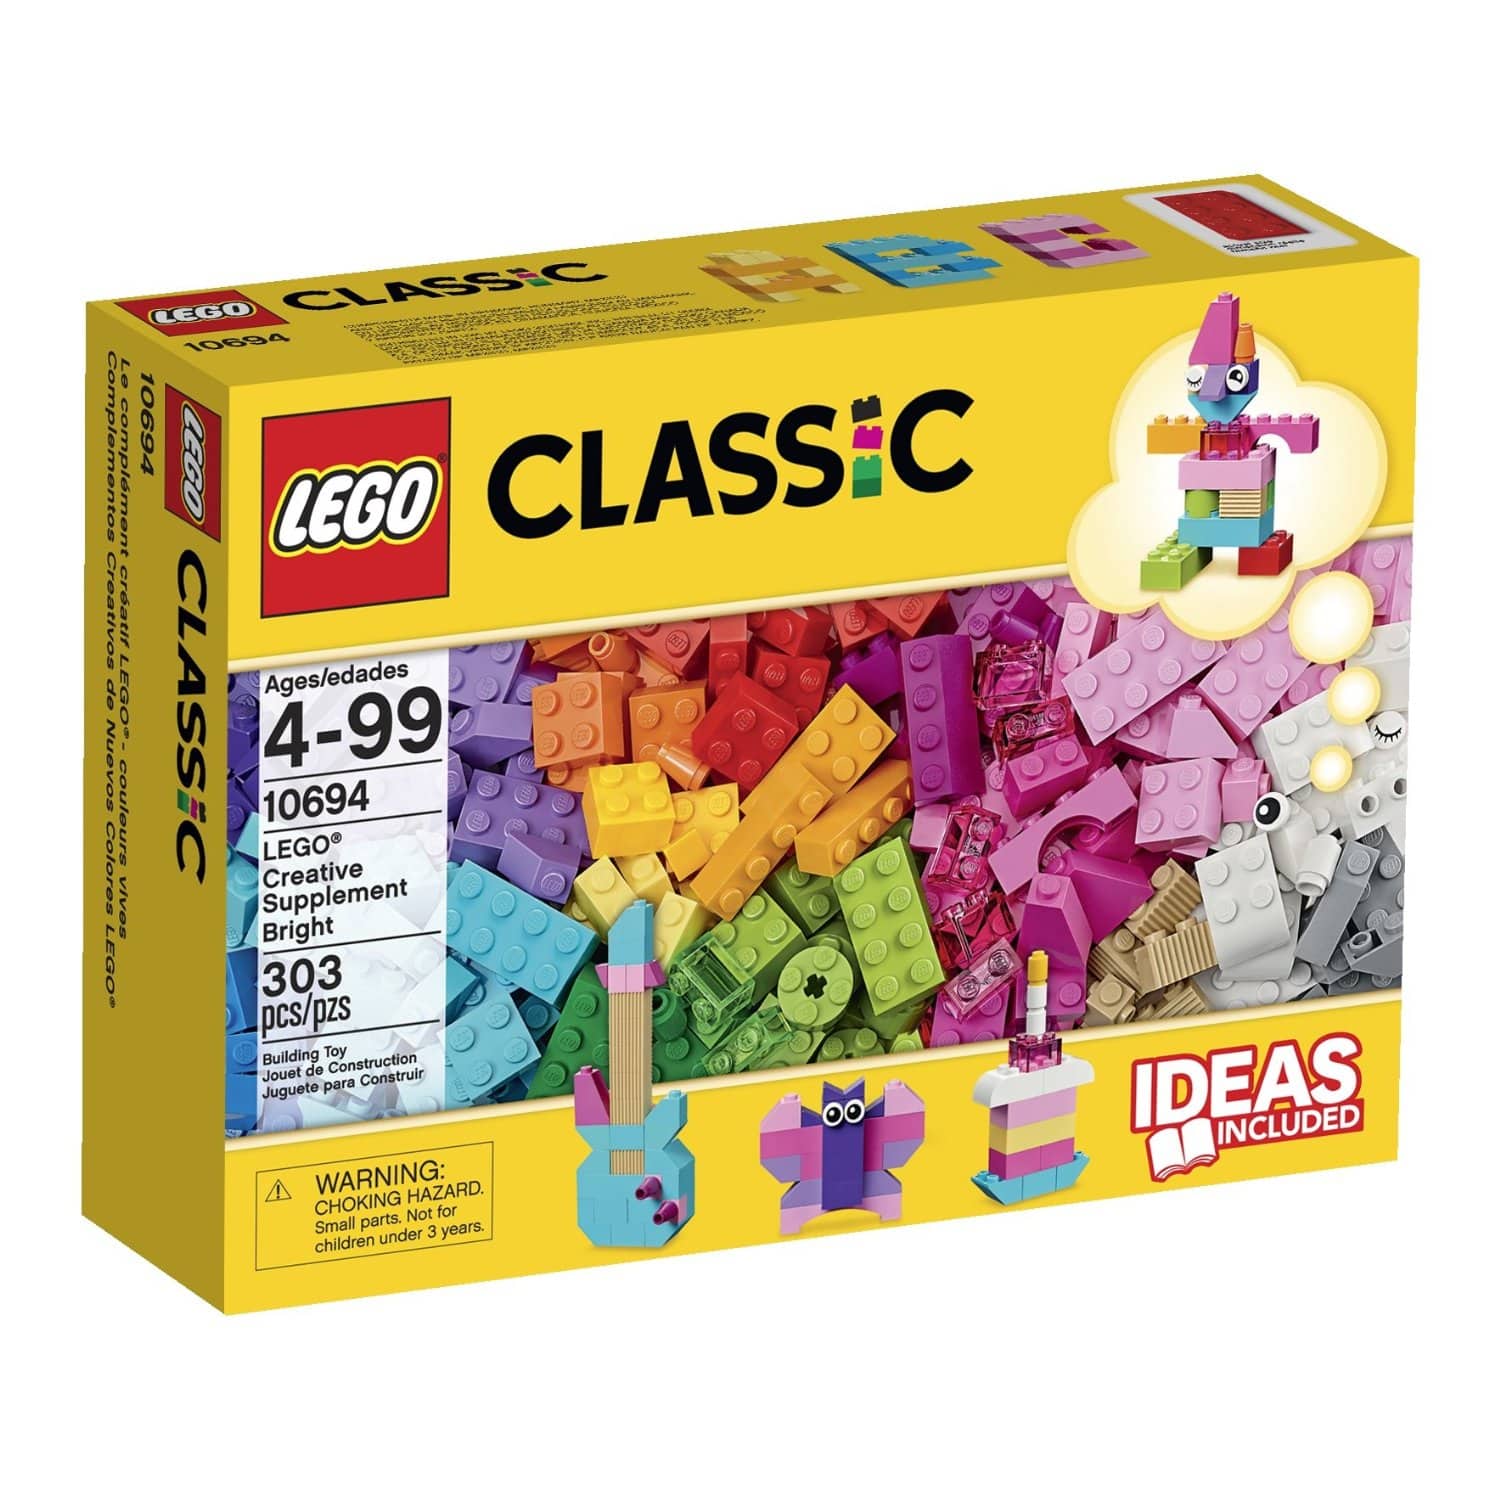 DEAL ALERT: LEGO Classic Creative Bright Supplement